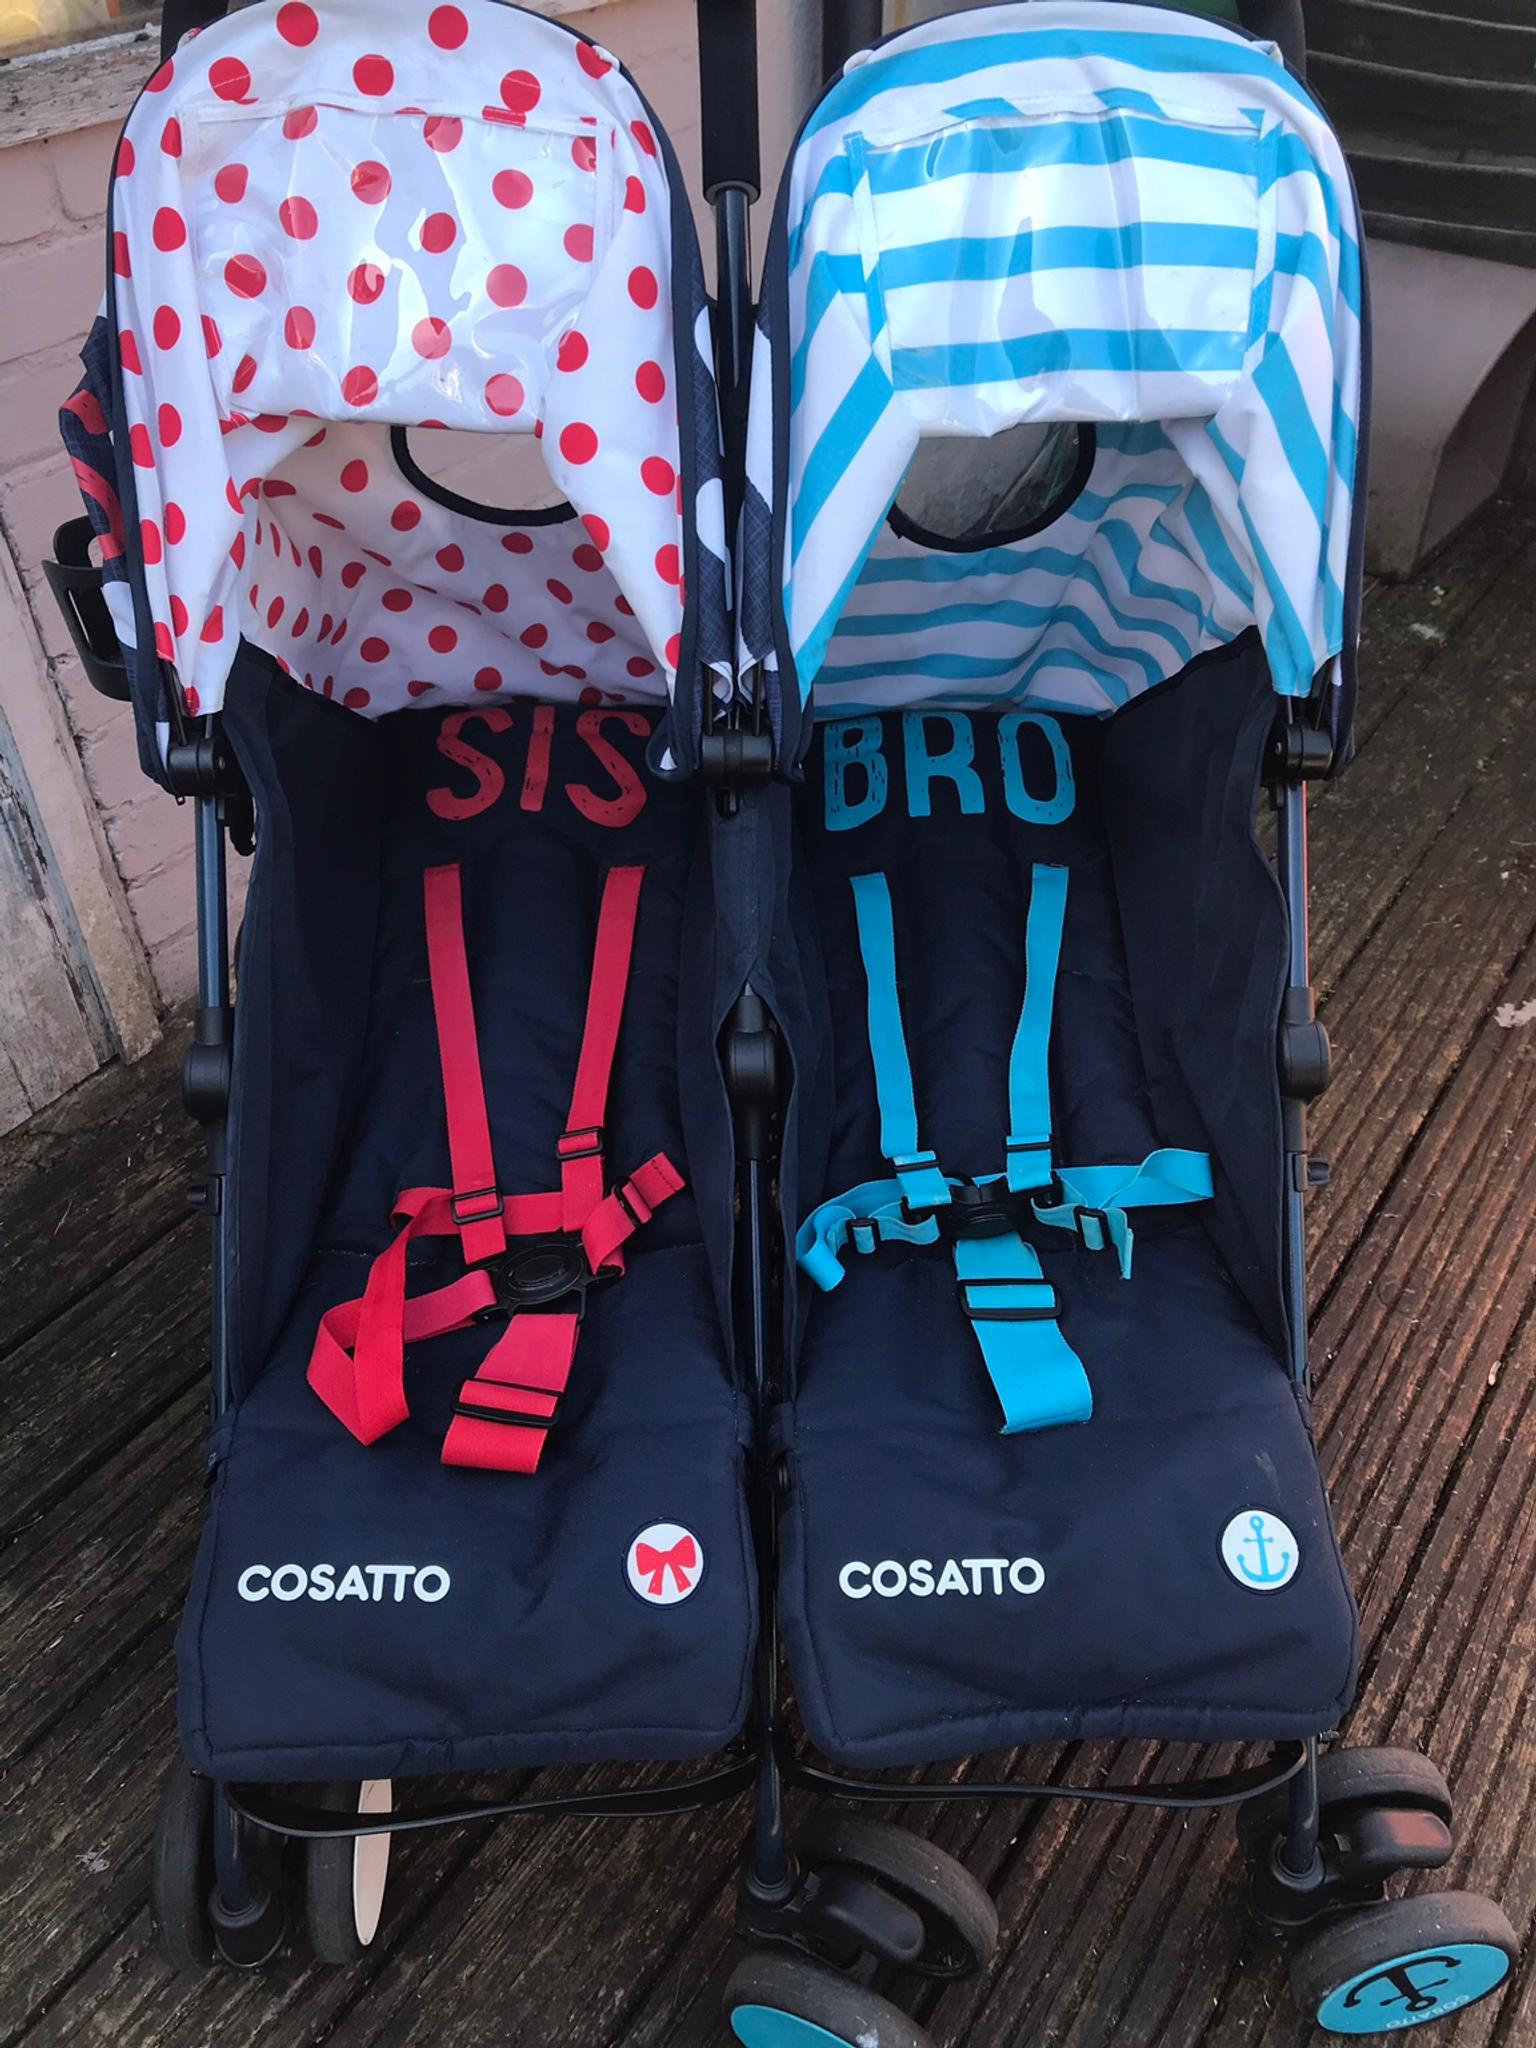 bro and sis stroller